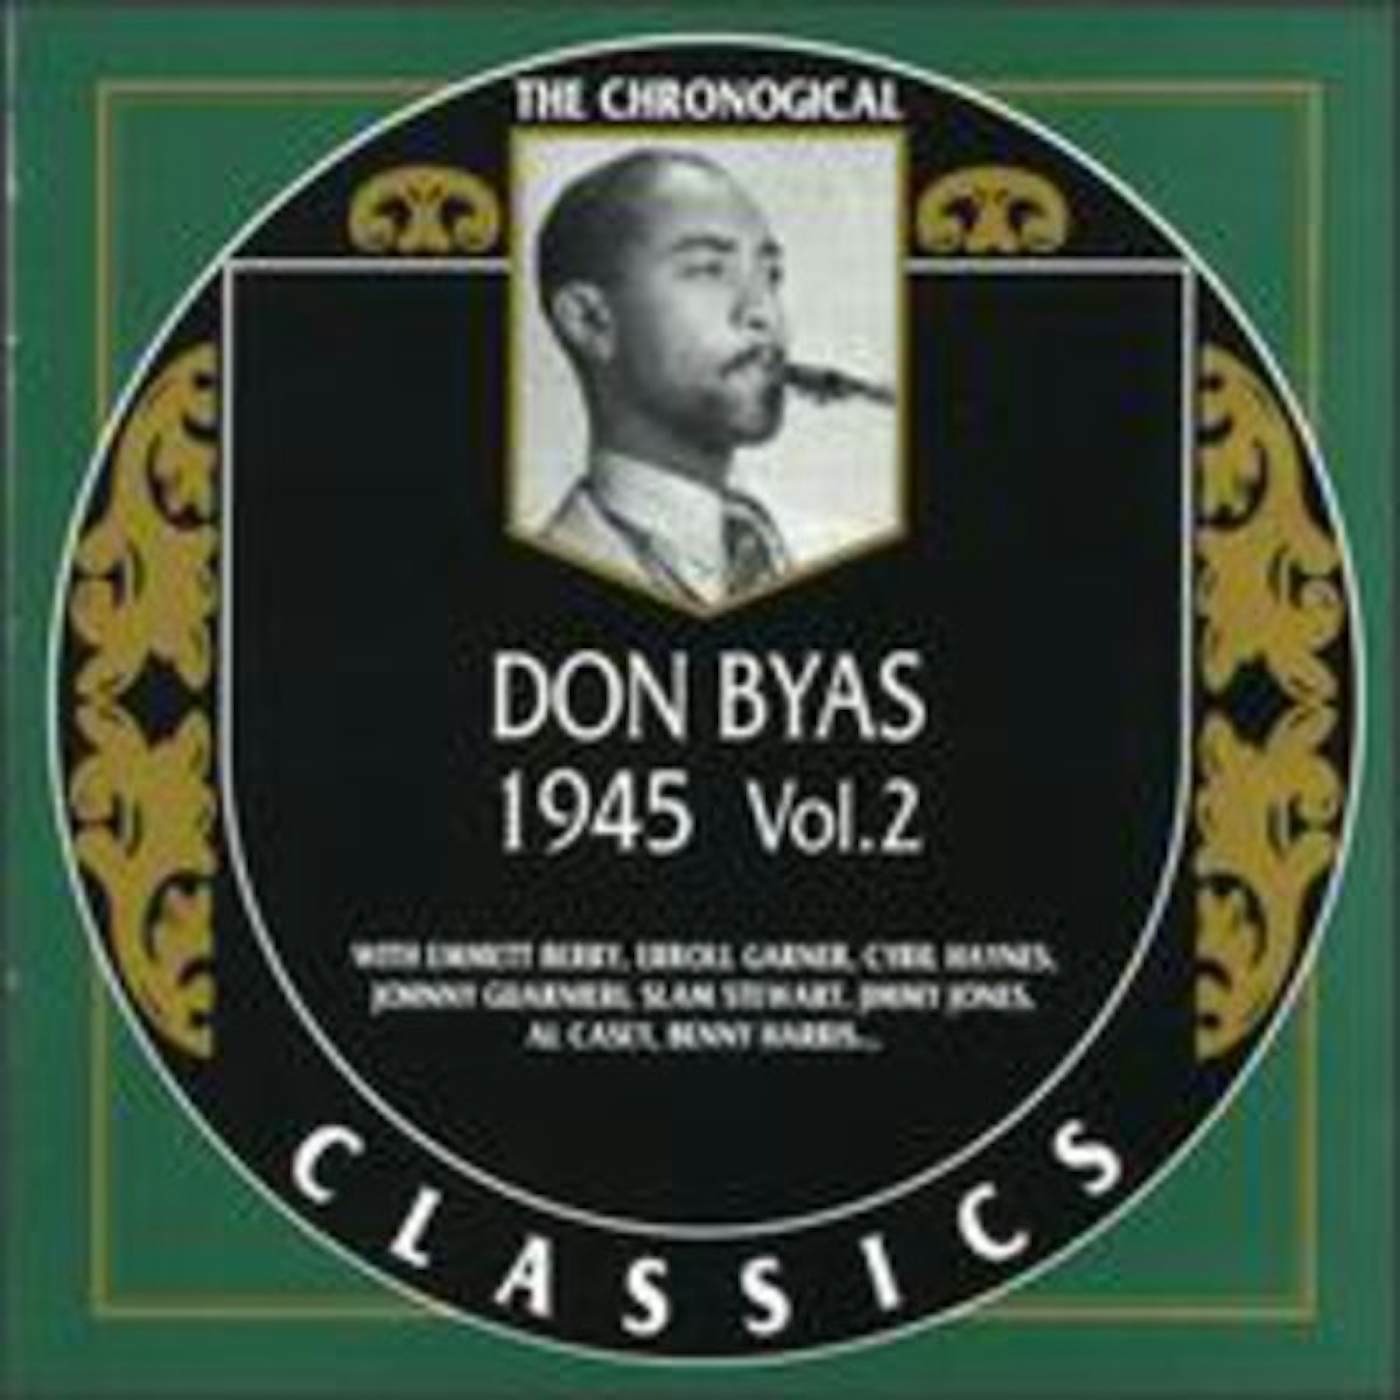 Don Byas 1945 VOLUME 2 CD